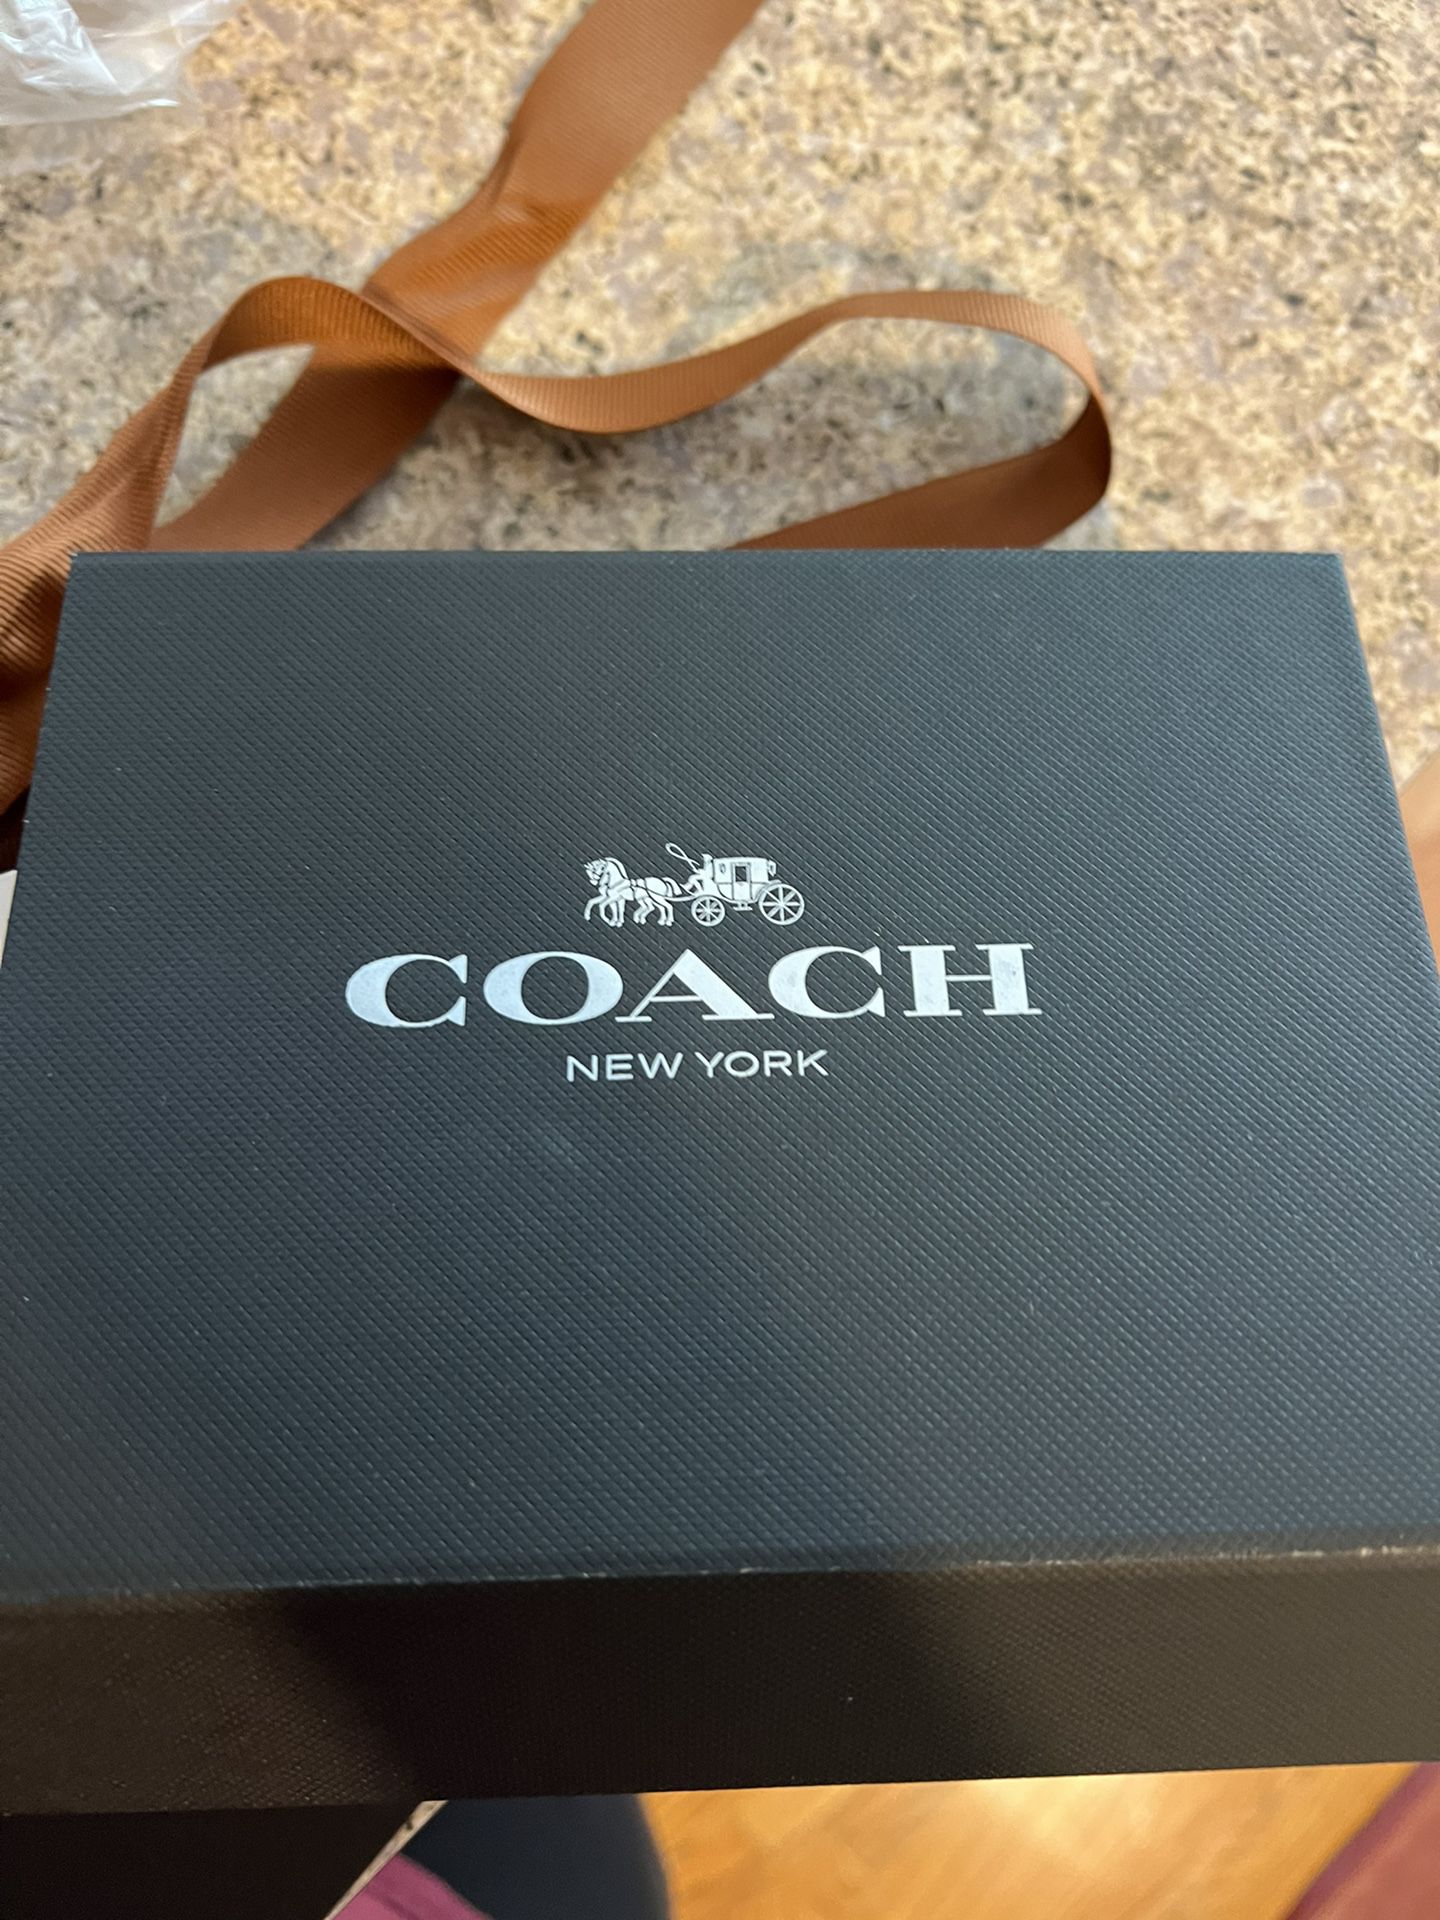 Coach Mini Bag Charm for Sale in Schertz, TX - OfferUp